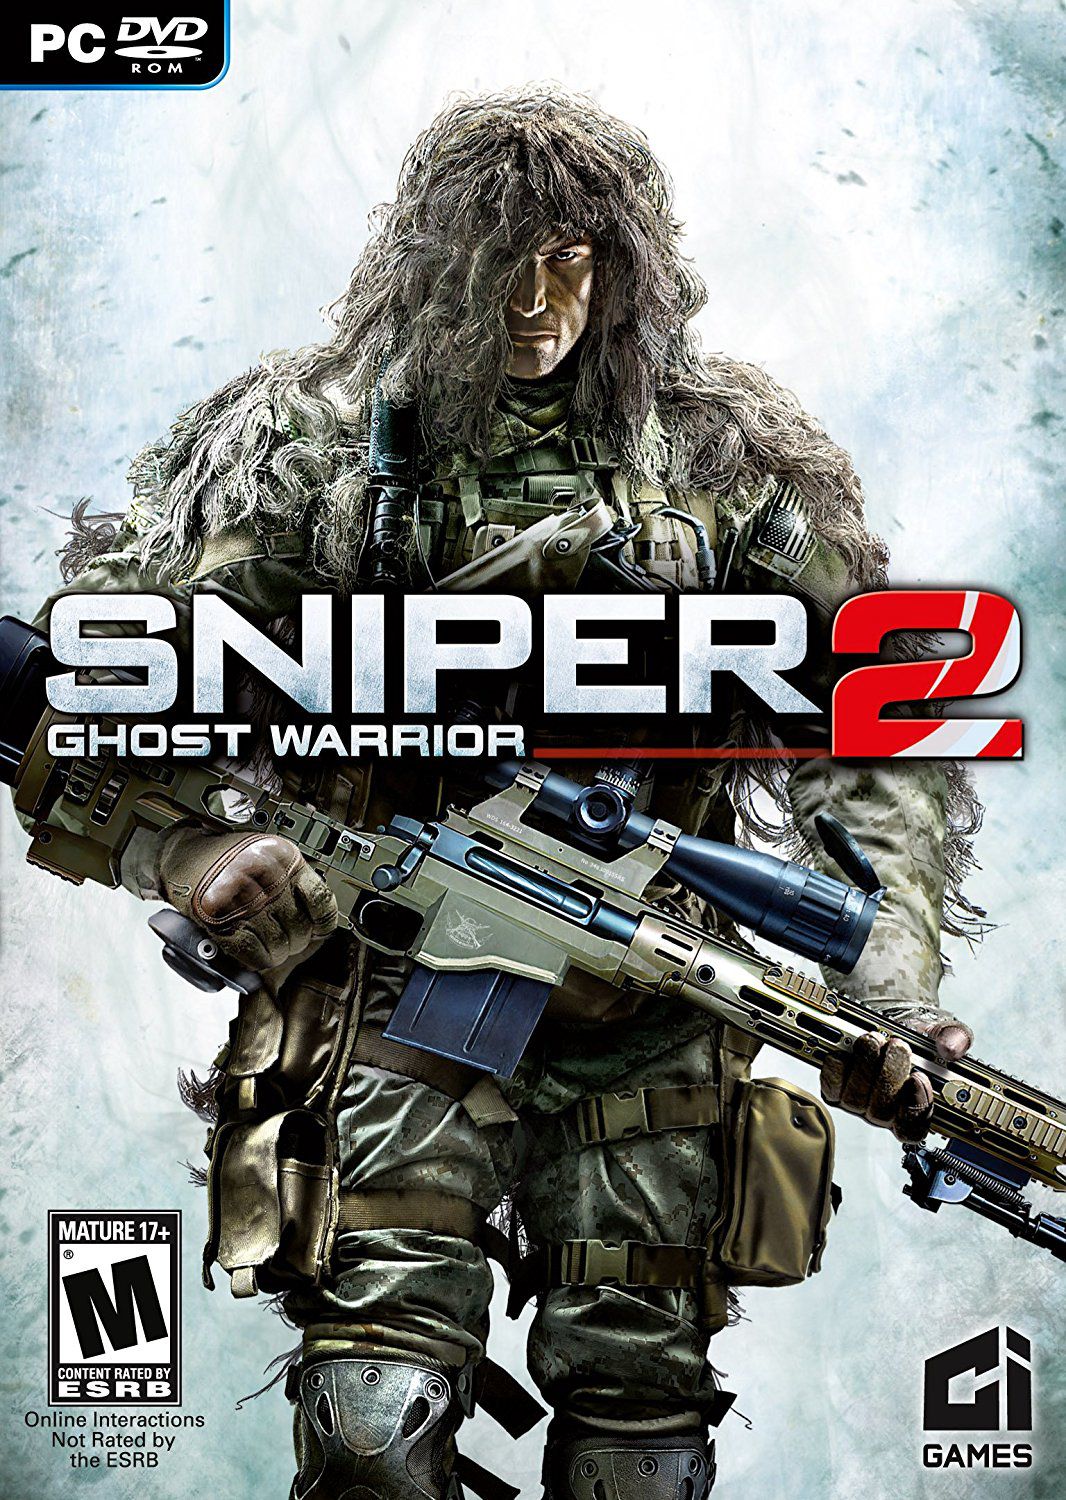 Sniper Ghost Warrior 2 Collectors Edition ALL DLC - PROPHET [Action|2013]